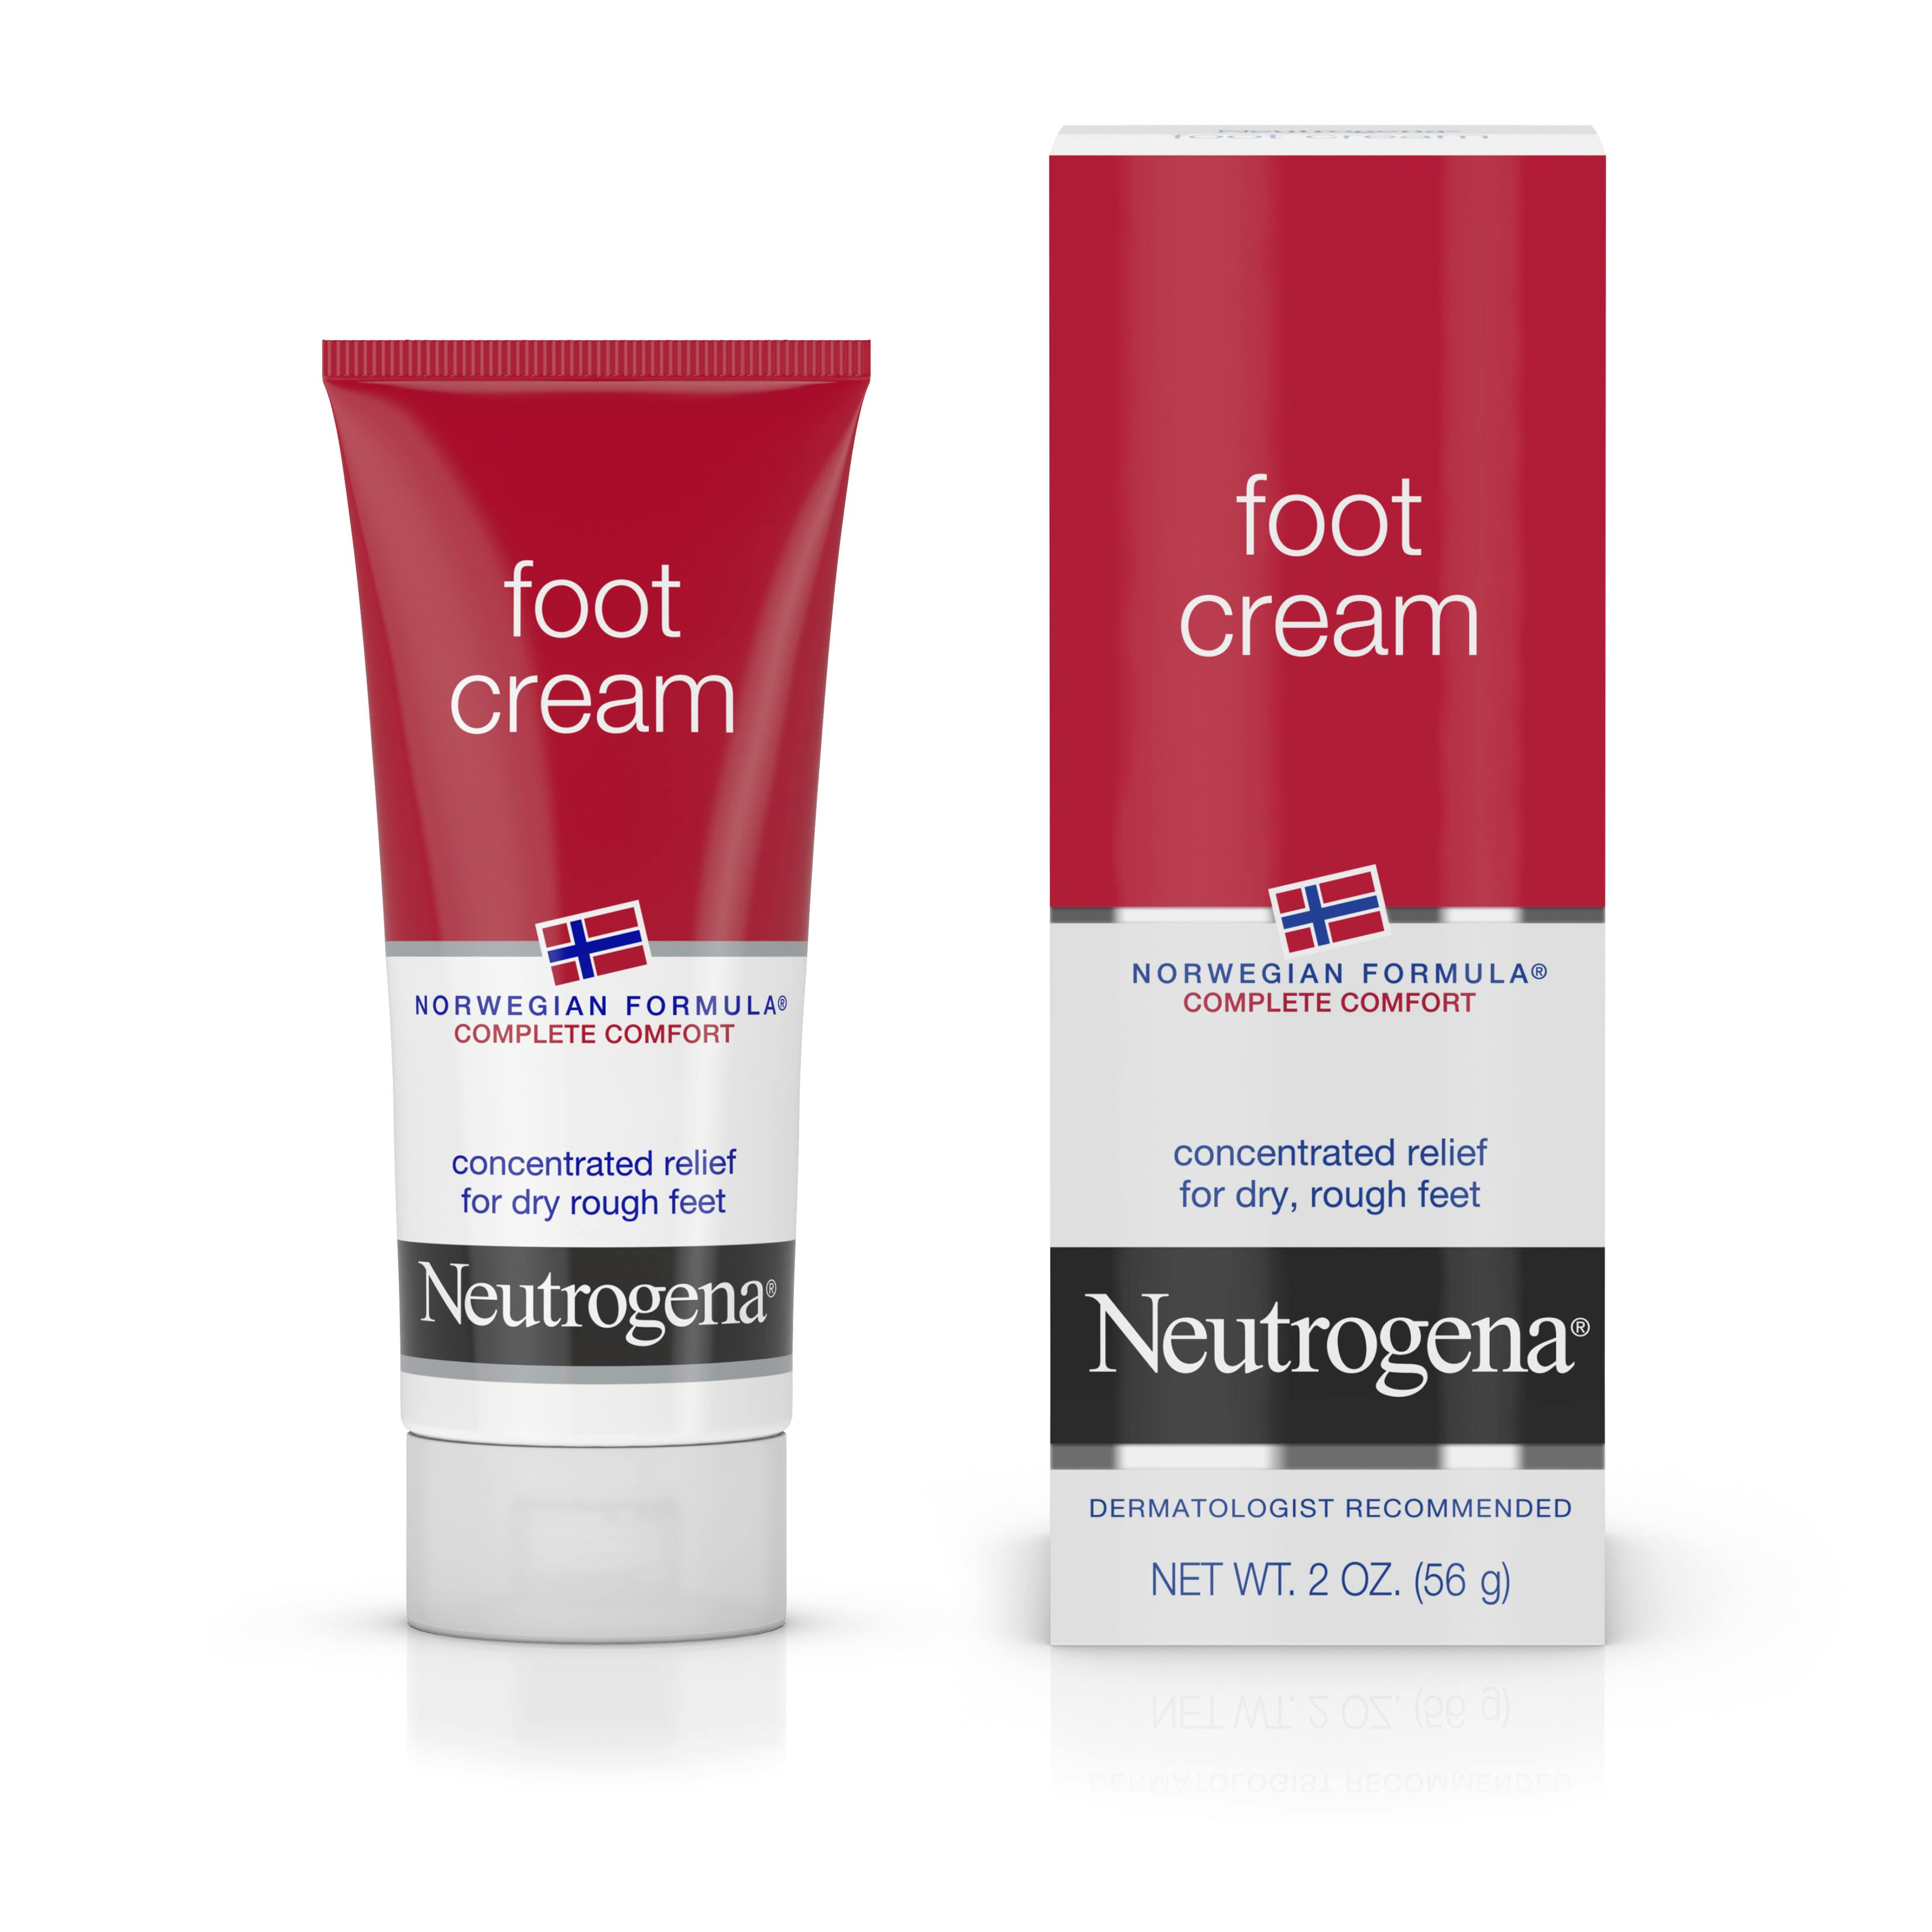 foot cream for dry feet